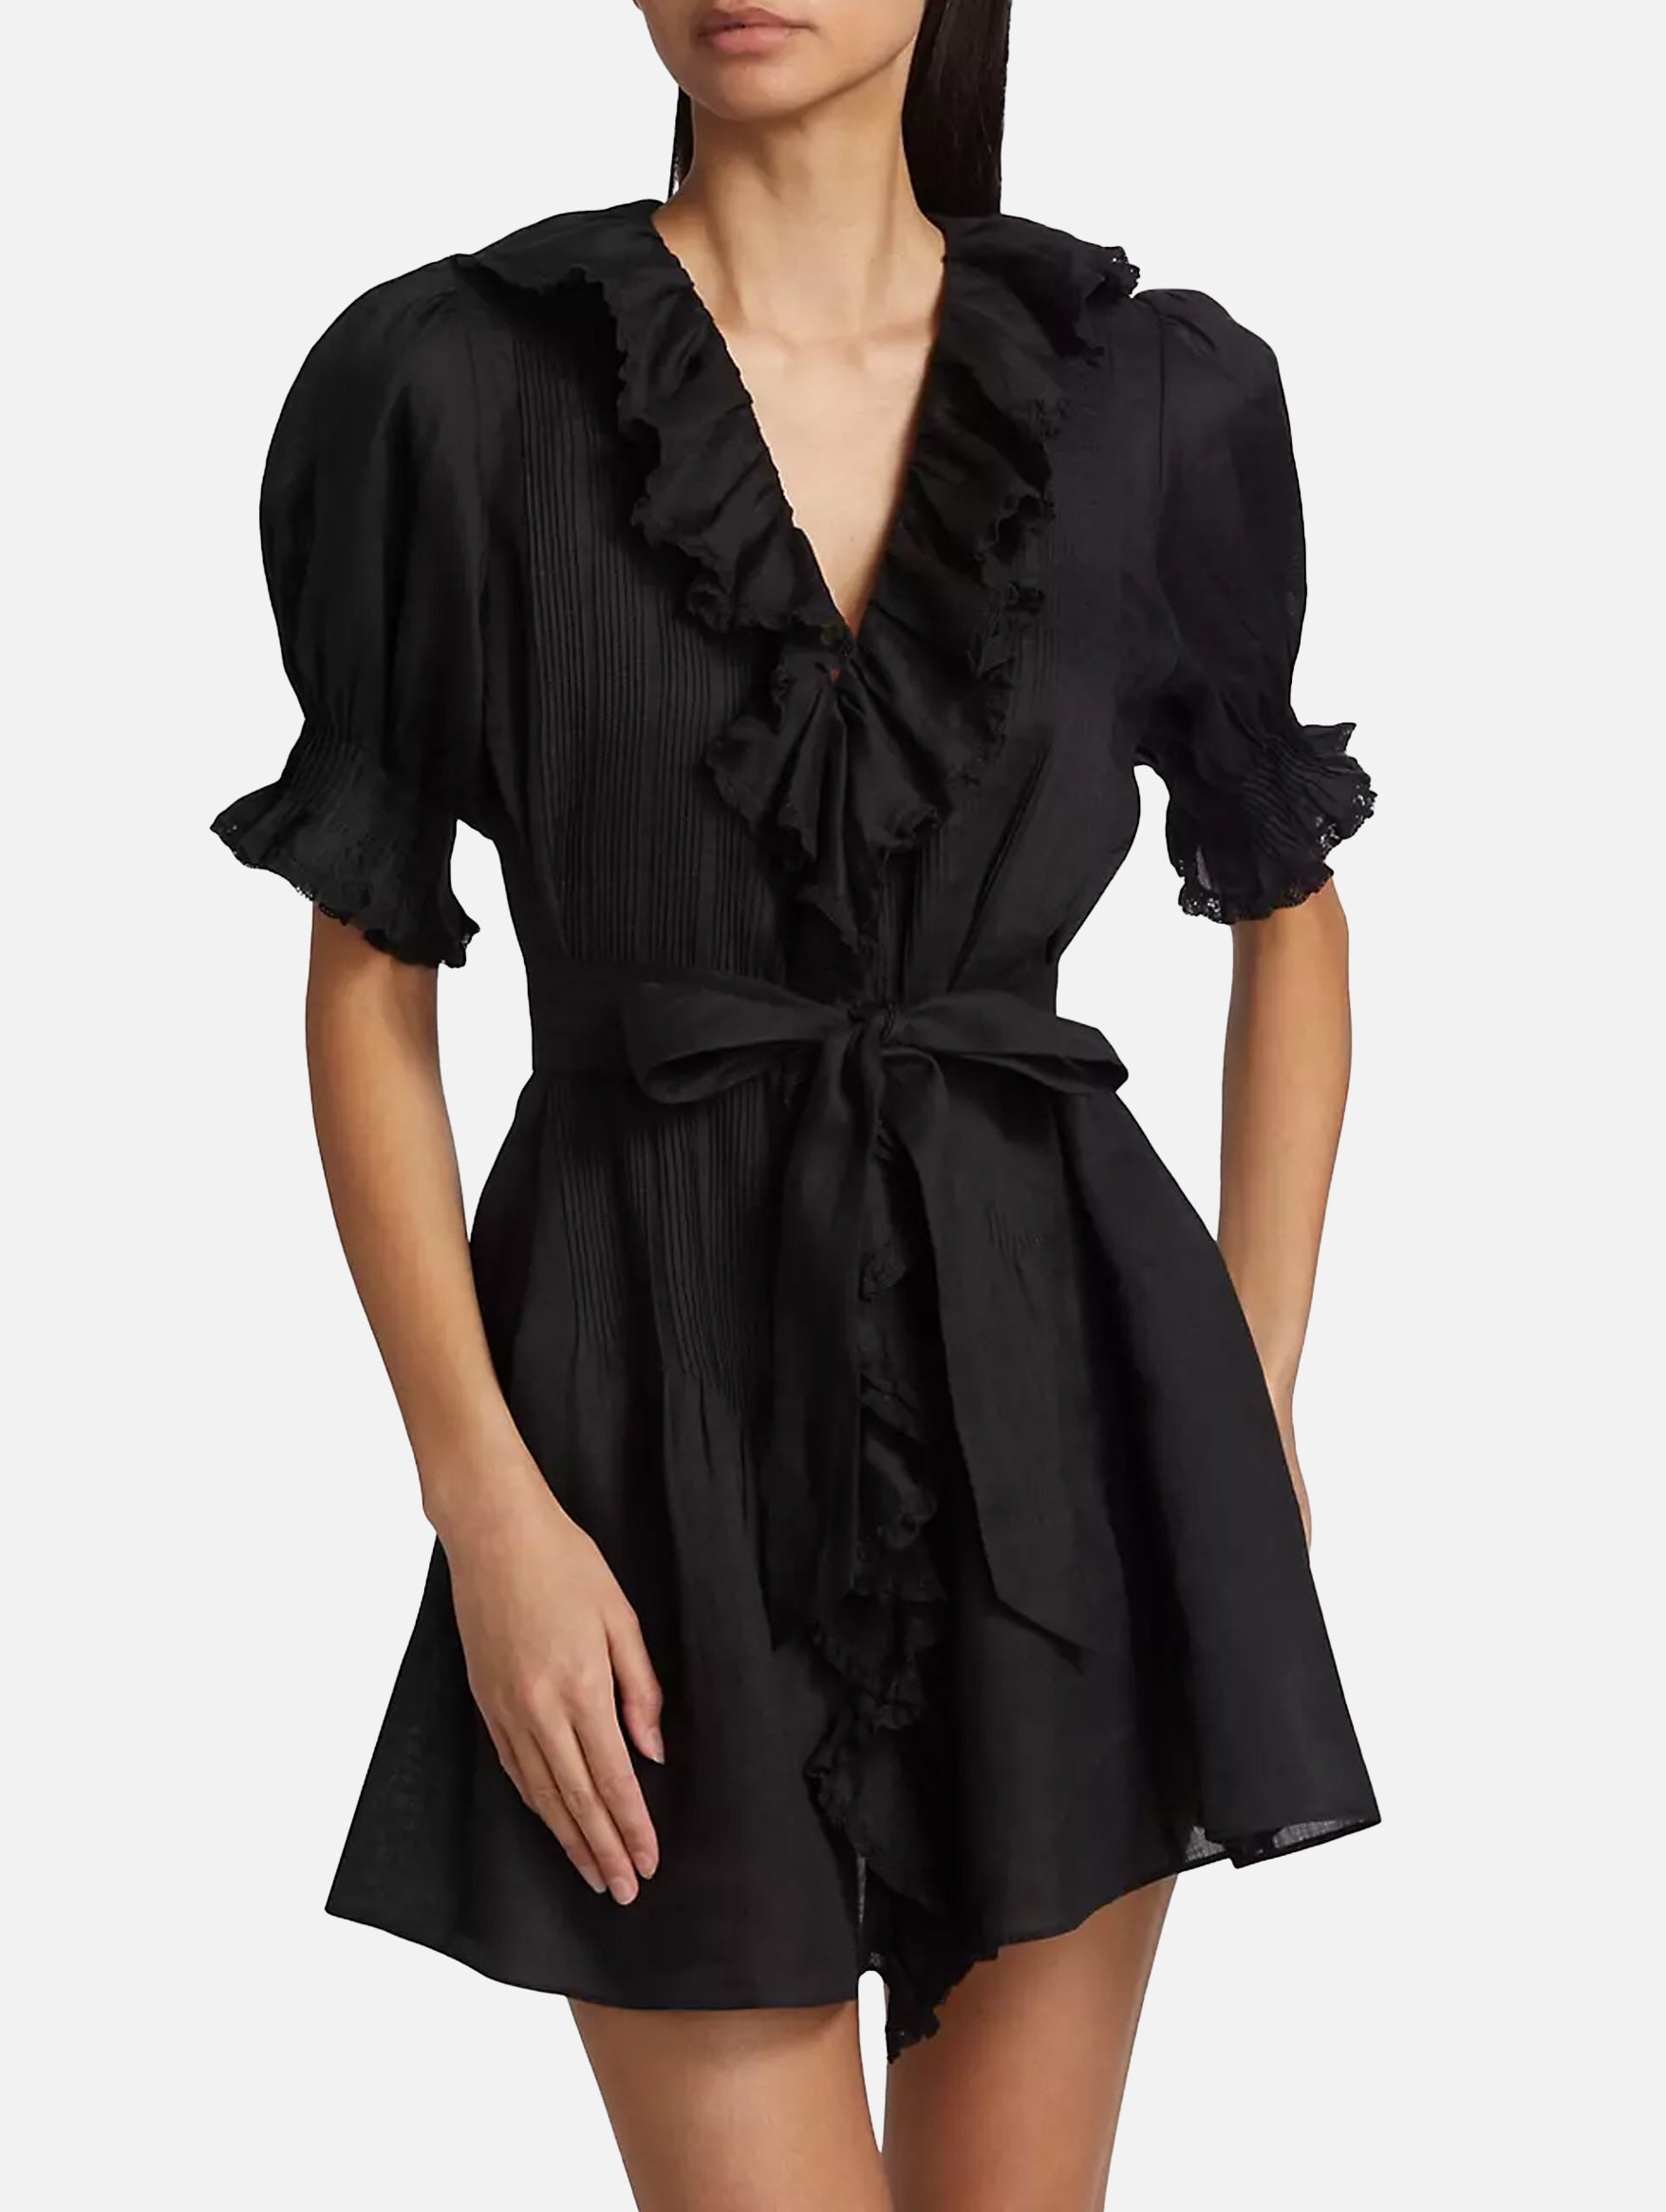 Piper Dress in Black